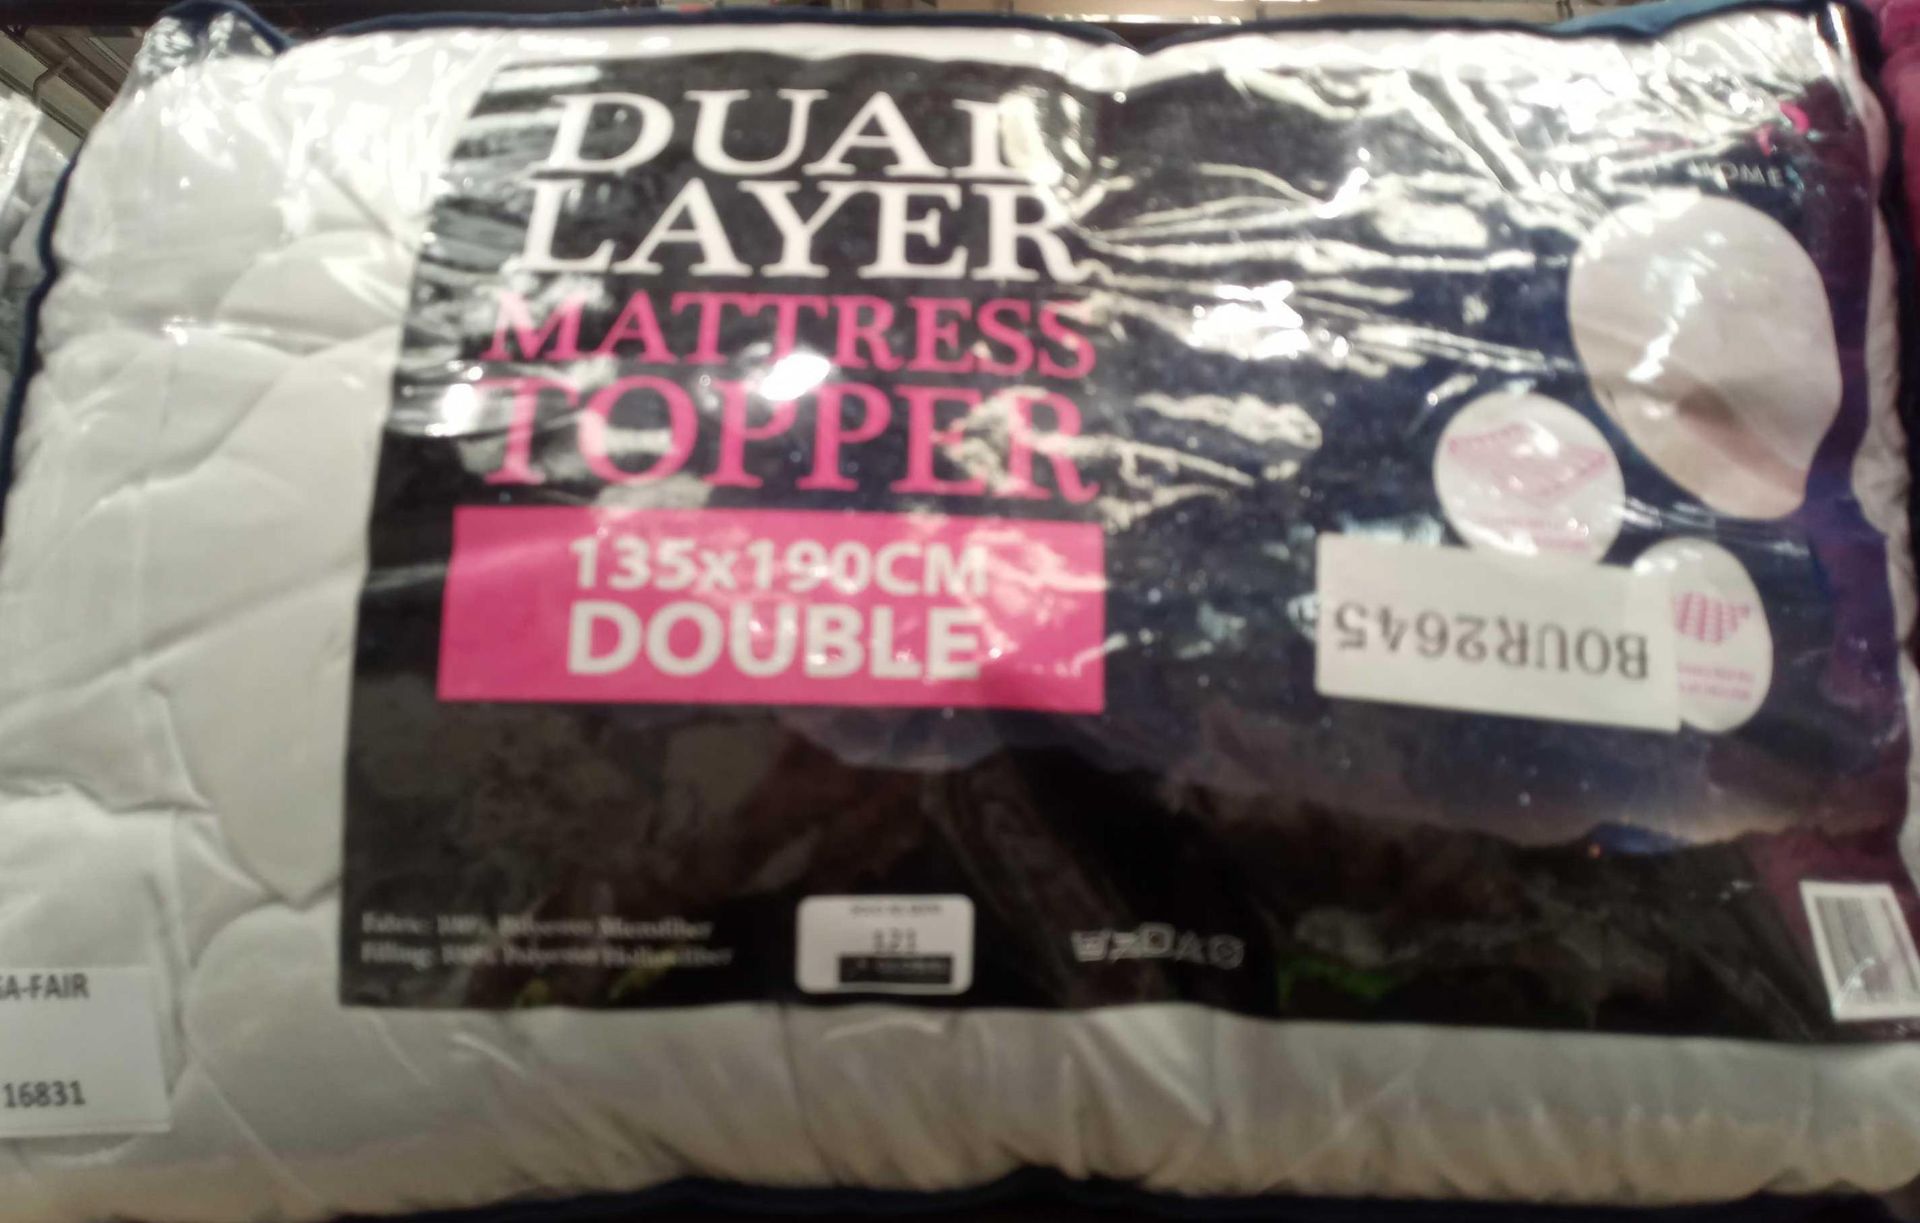 Dual layer mattress topper